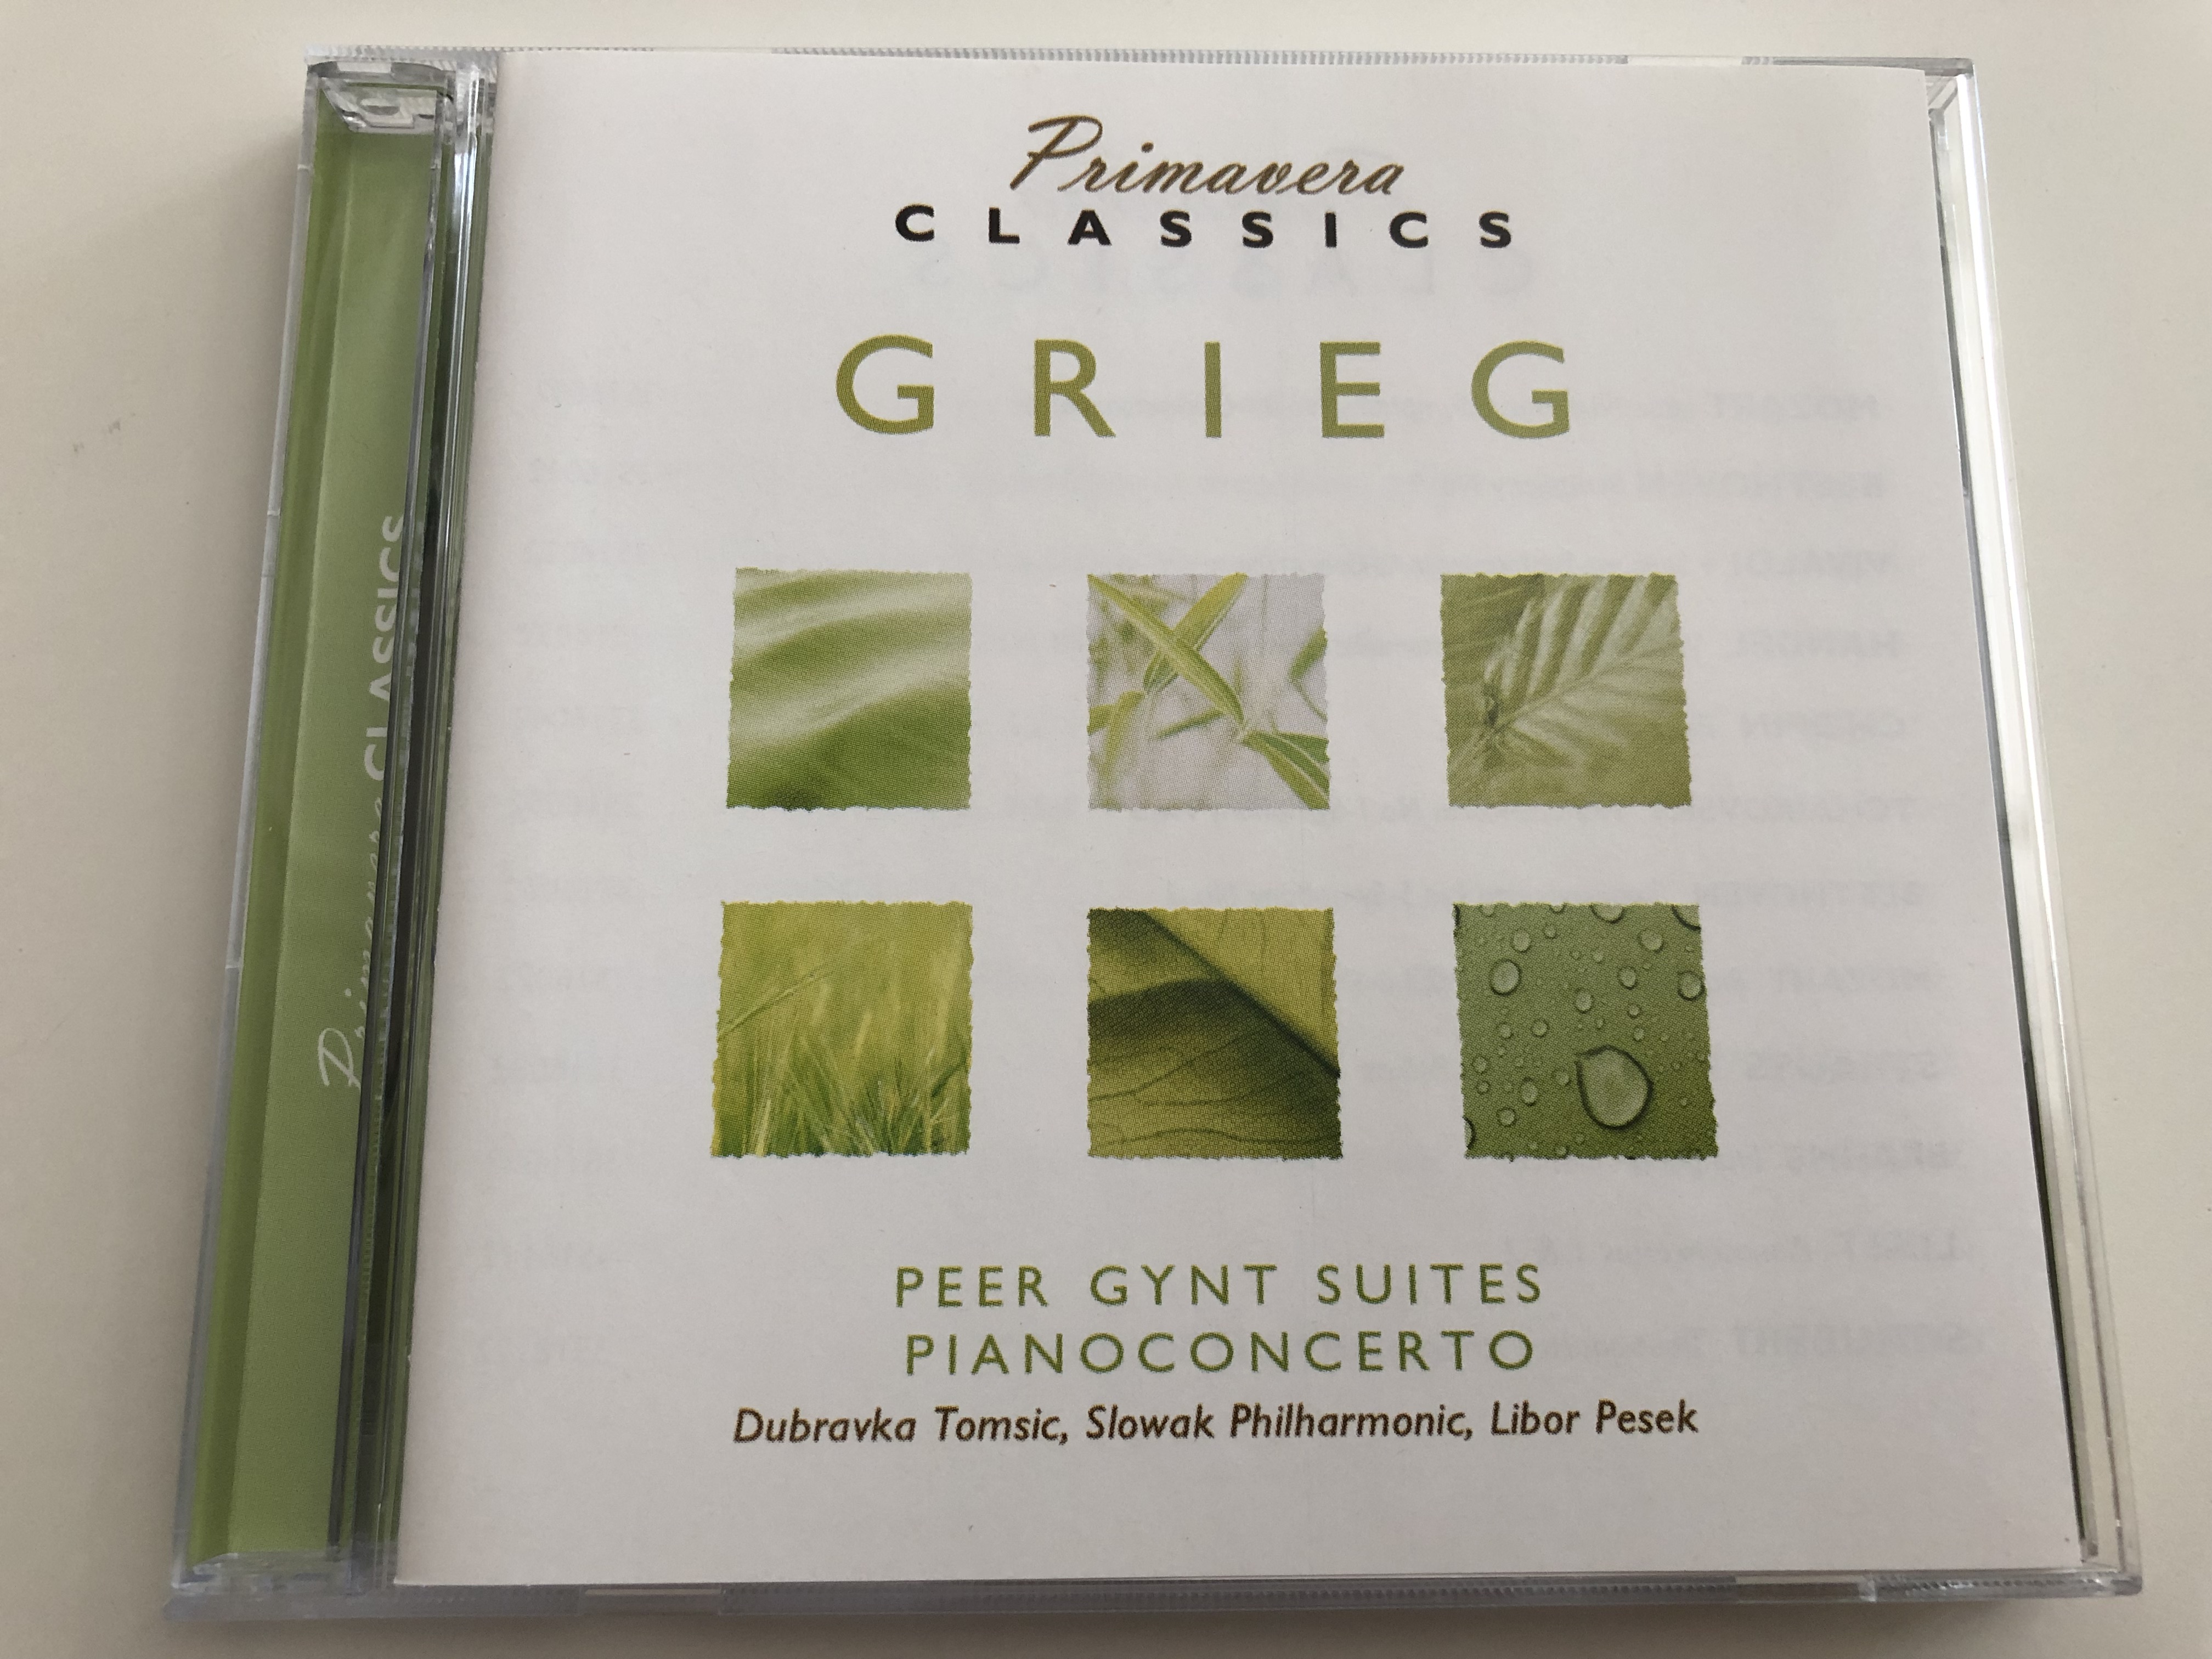 grieg-peer-gynt-suites-pianoconcerto-dubravka-tomsic-slowak-philharmonic-libor-pesek-primavera-classics-audio-cd-2006-3516102-1-.jpg